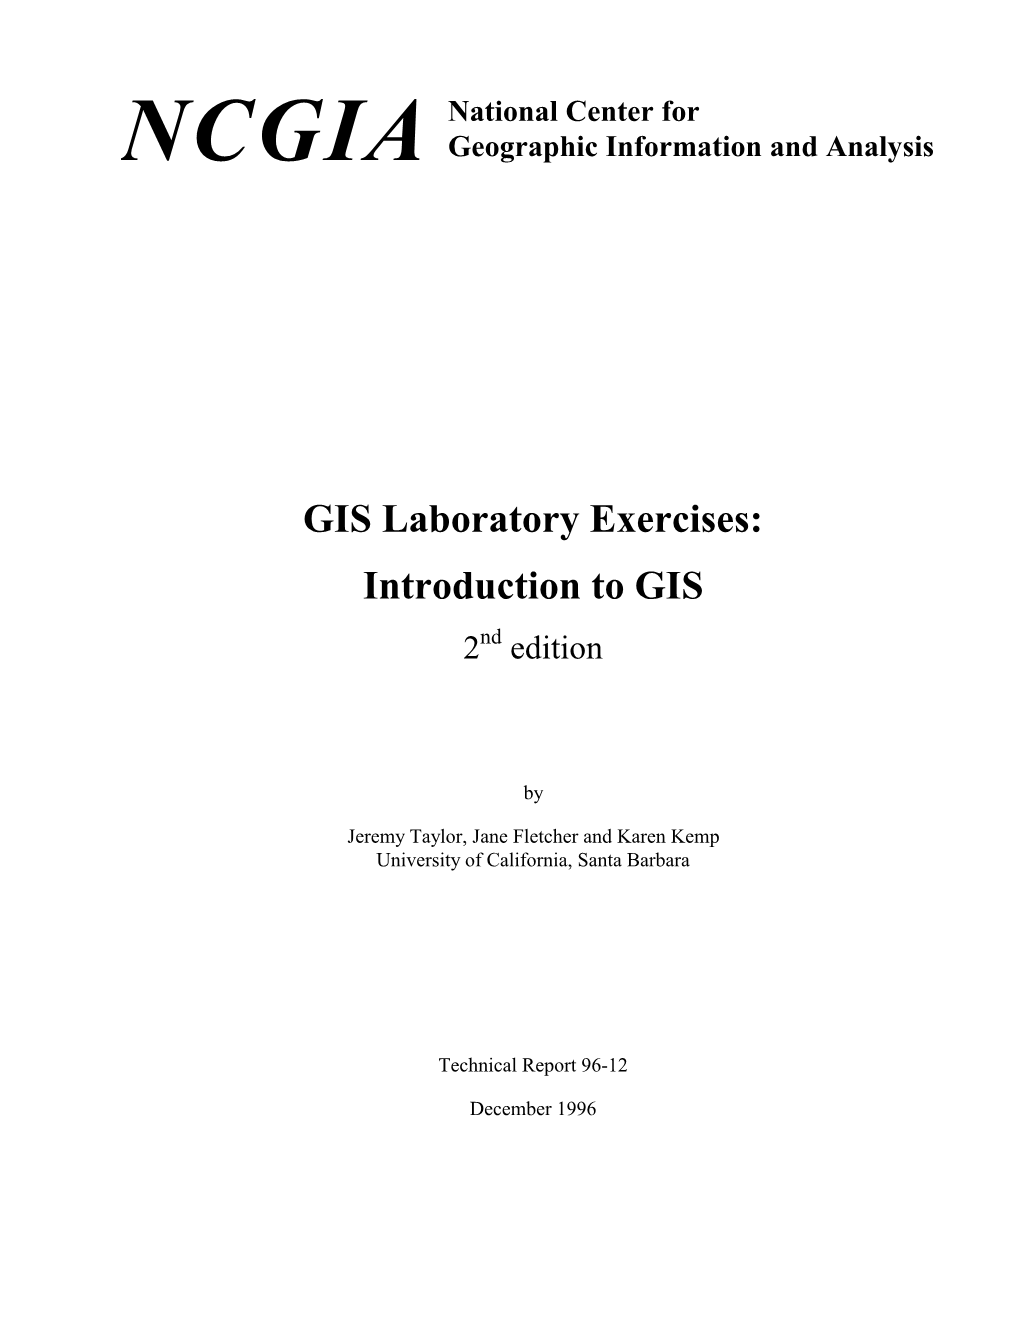 GIS Laboratory Exercises: Introduction to GIS 2Nd Edition